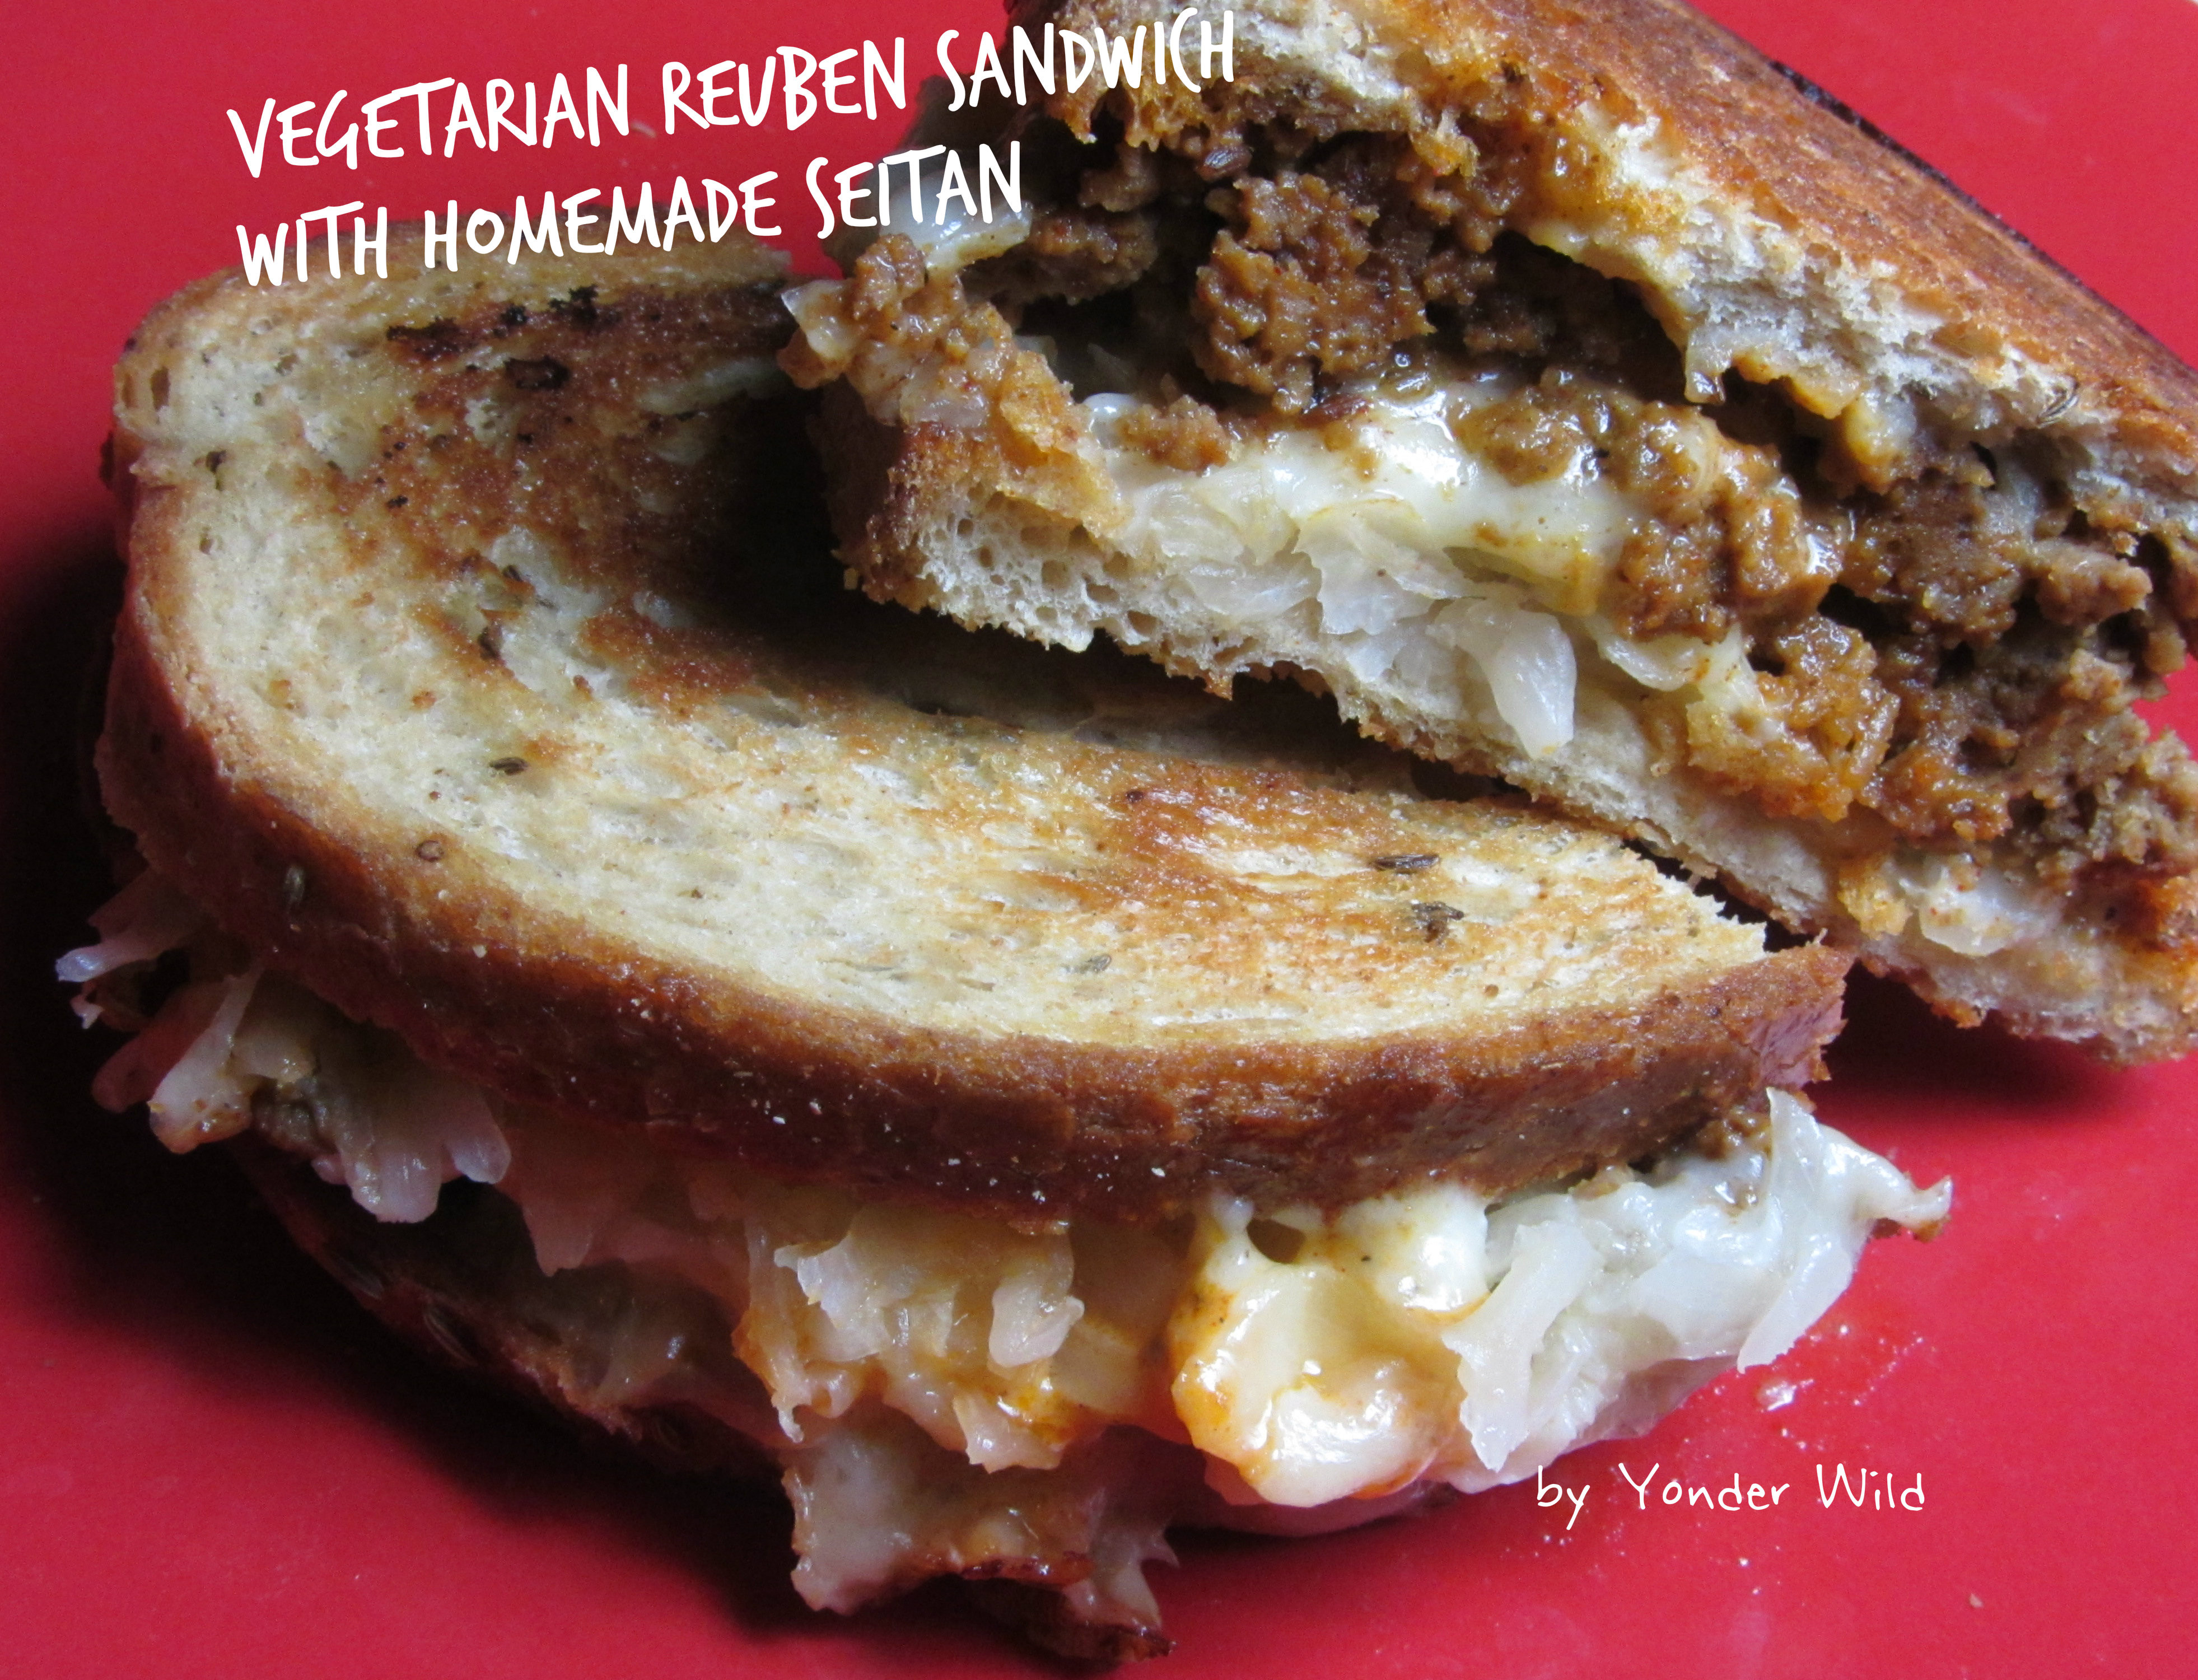 Vegetarian Reuben Sandwich Recipes
 Ve arian Reuben Sandwiches with Homemade Seitan